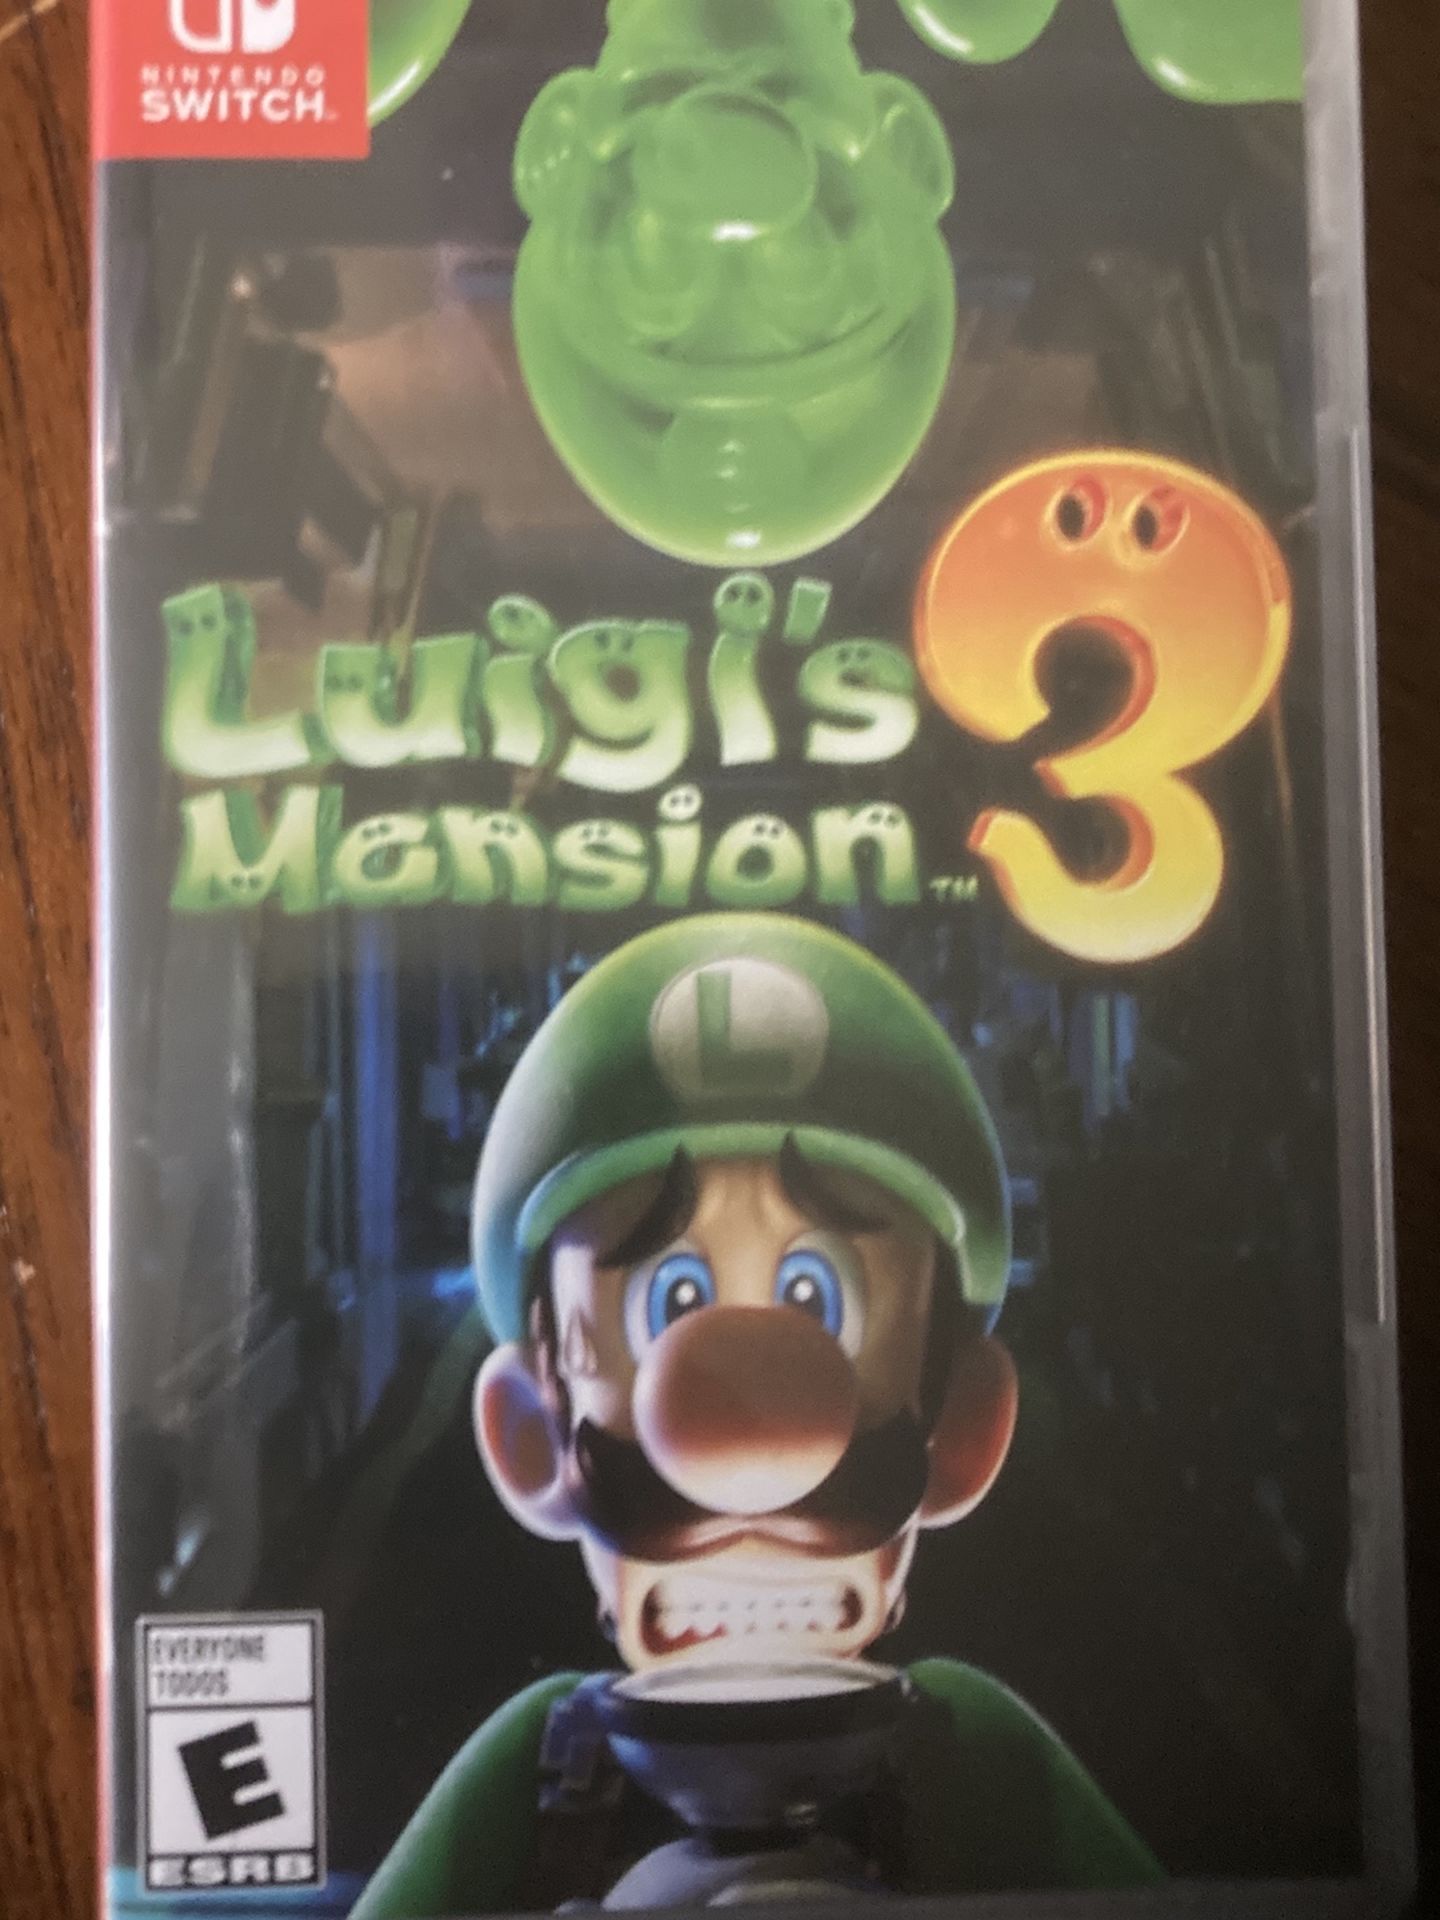 Nintendo switch luigi’s mansion 3 New and sealed